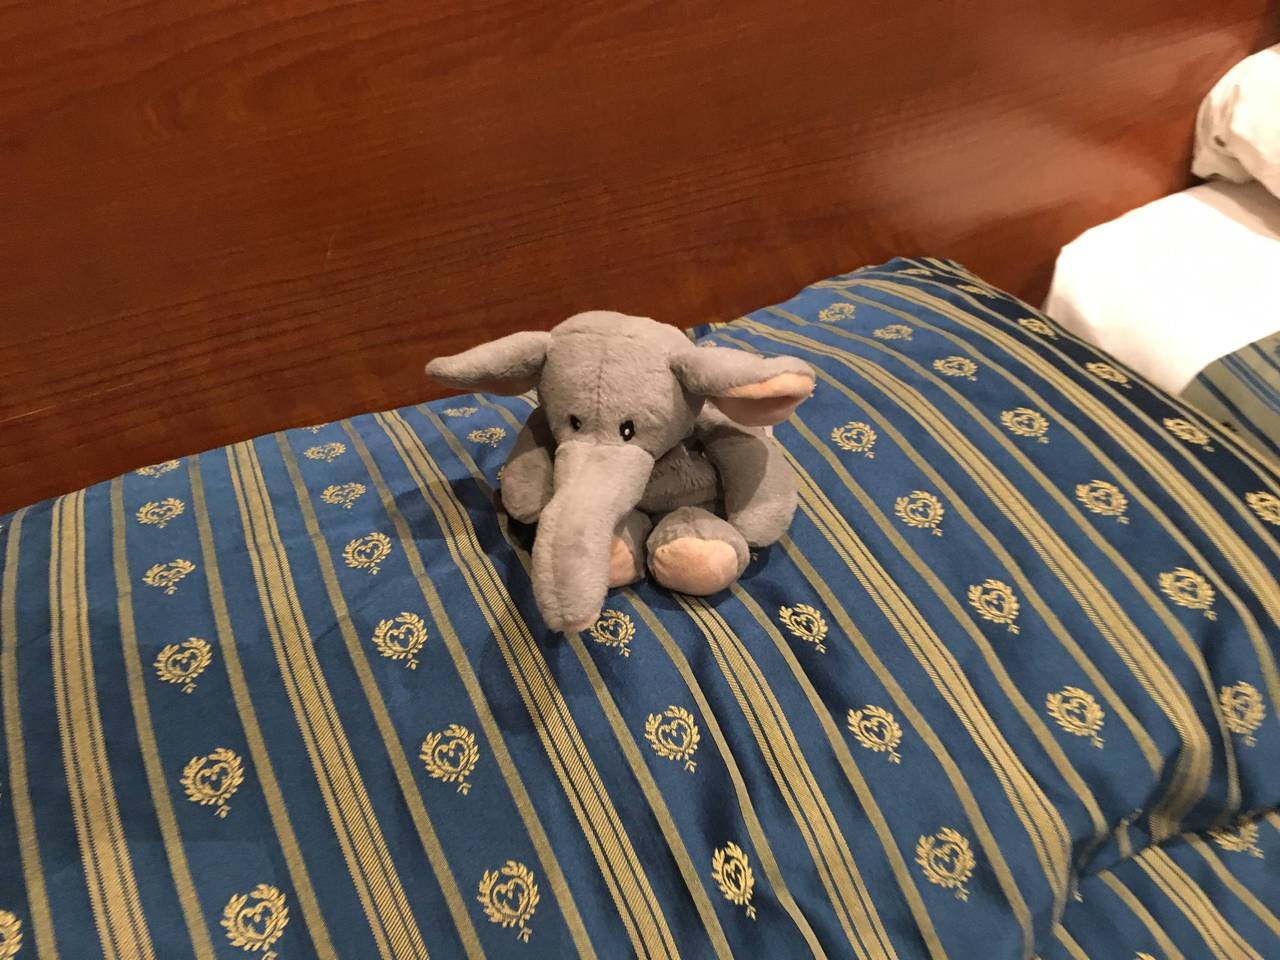 Stuffed elephant sitting on a pillow